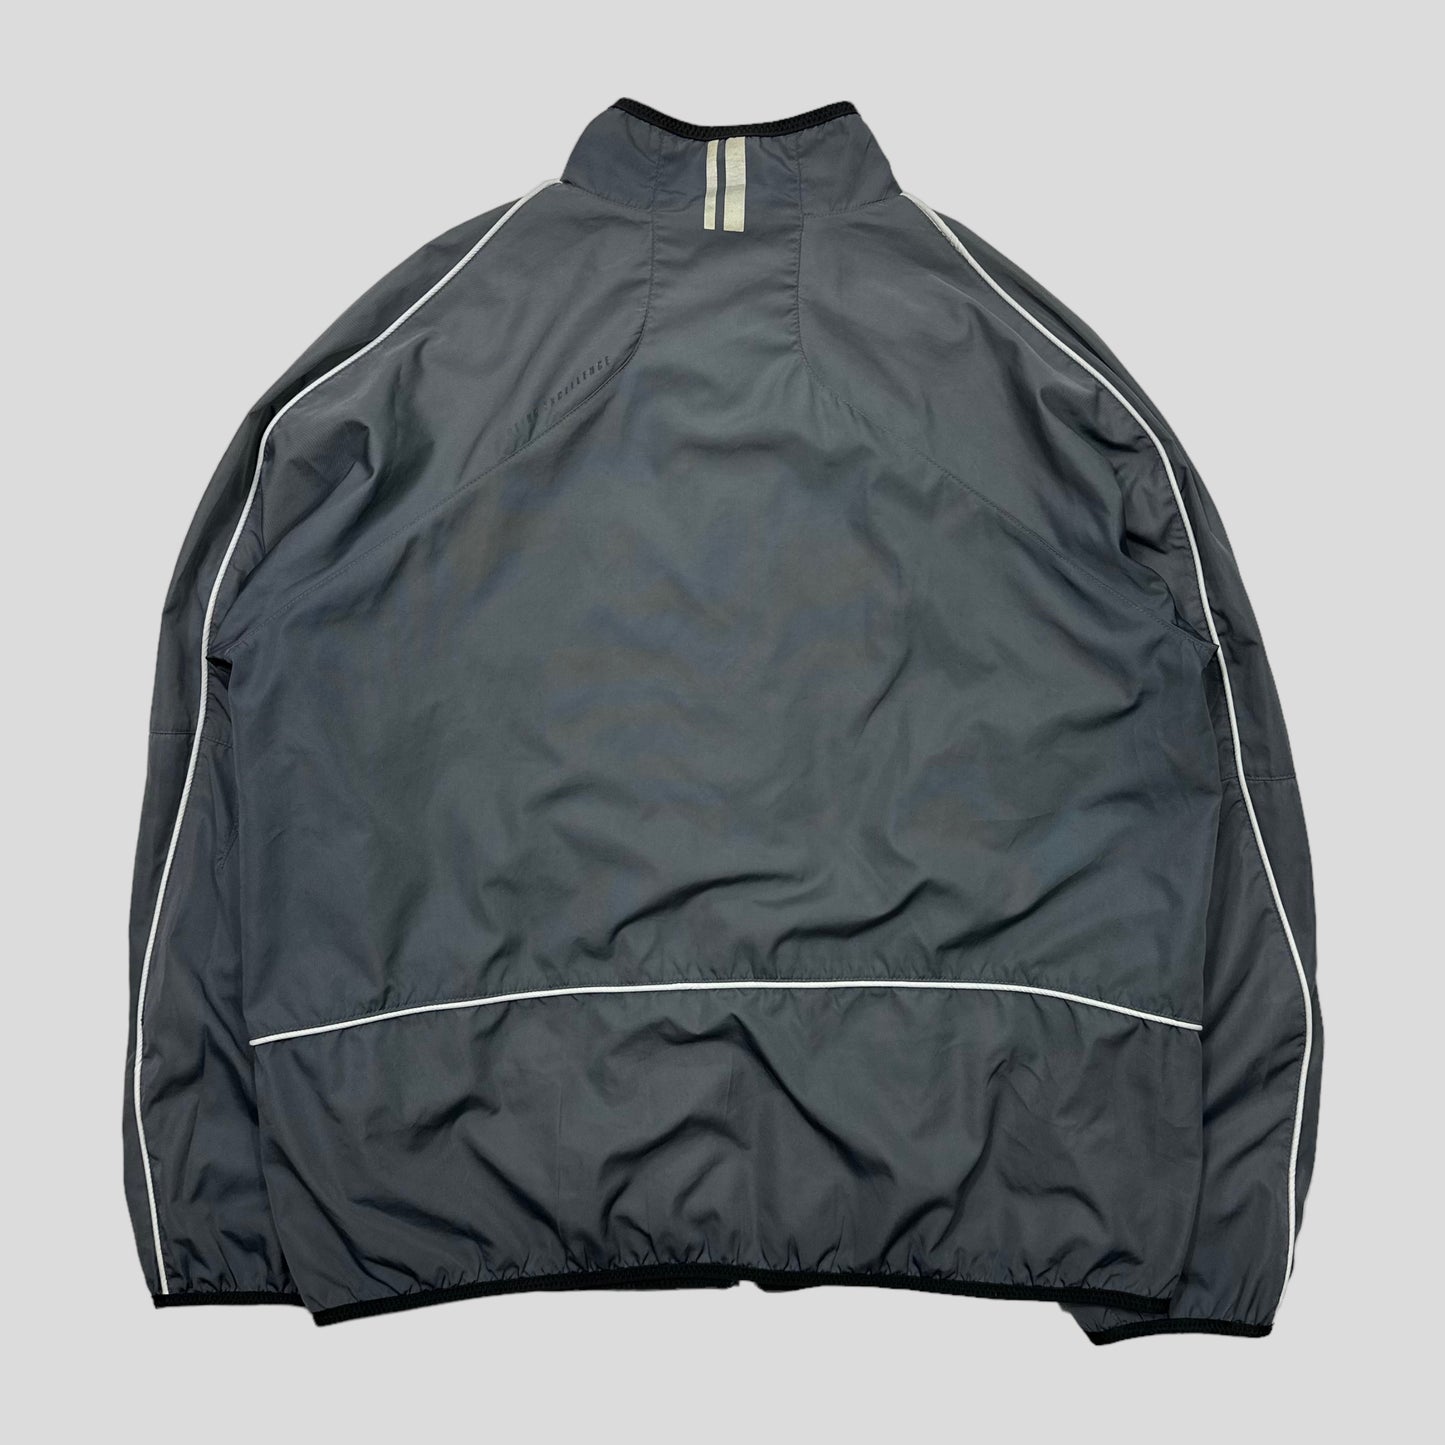 Nike 2003 Fleece Lined Ventilated Nylon Jacket - L